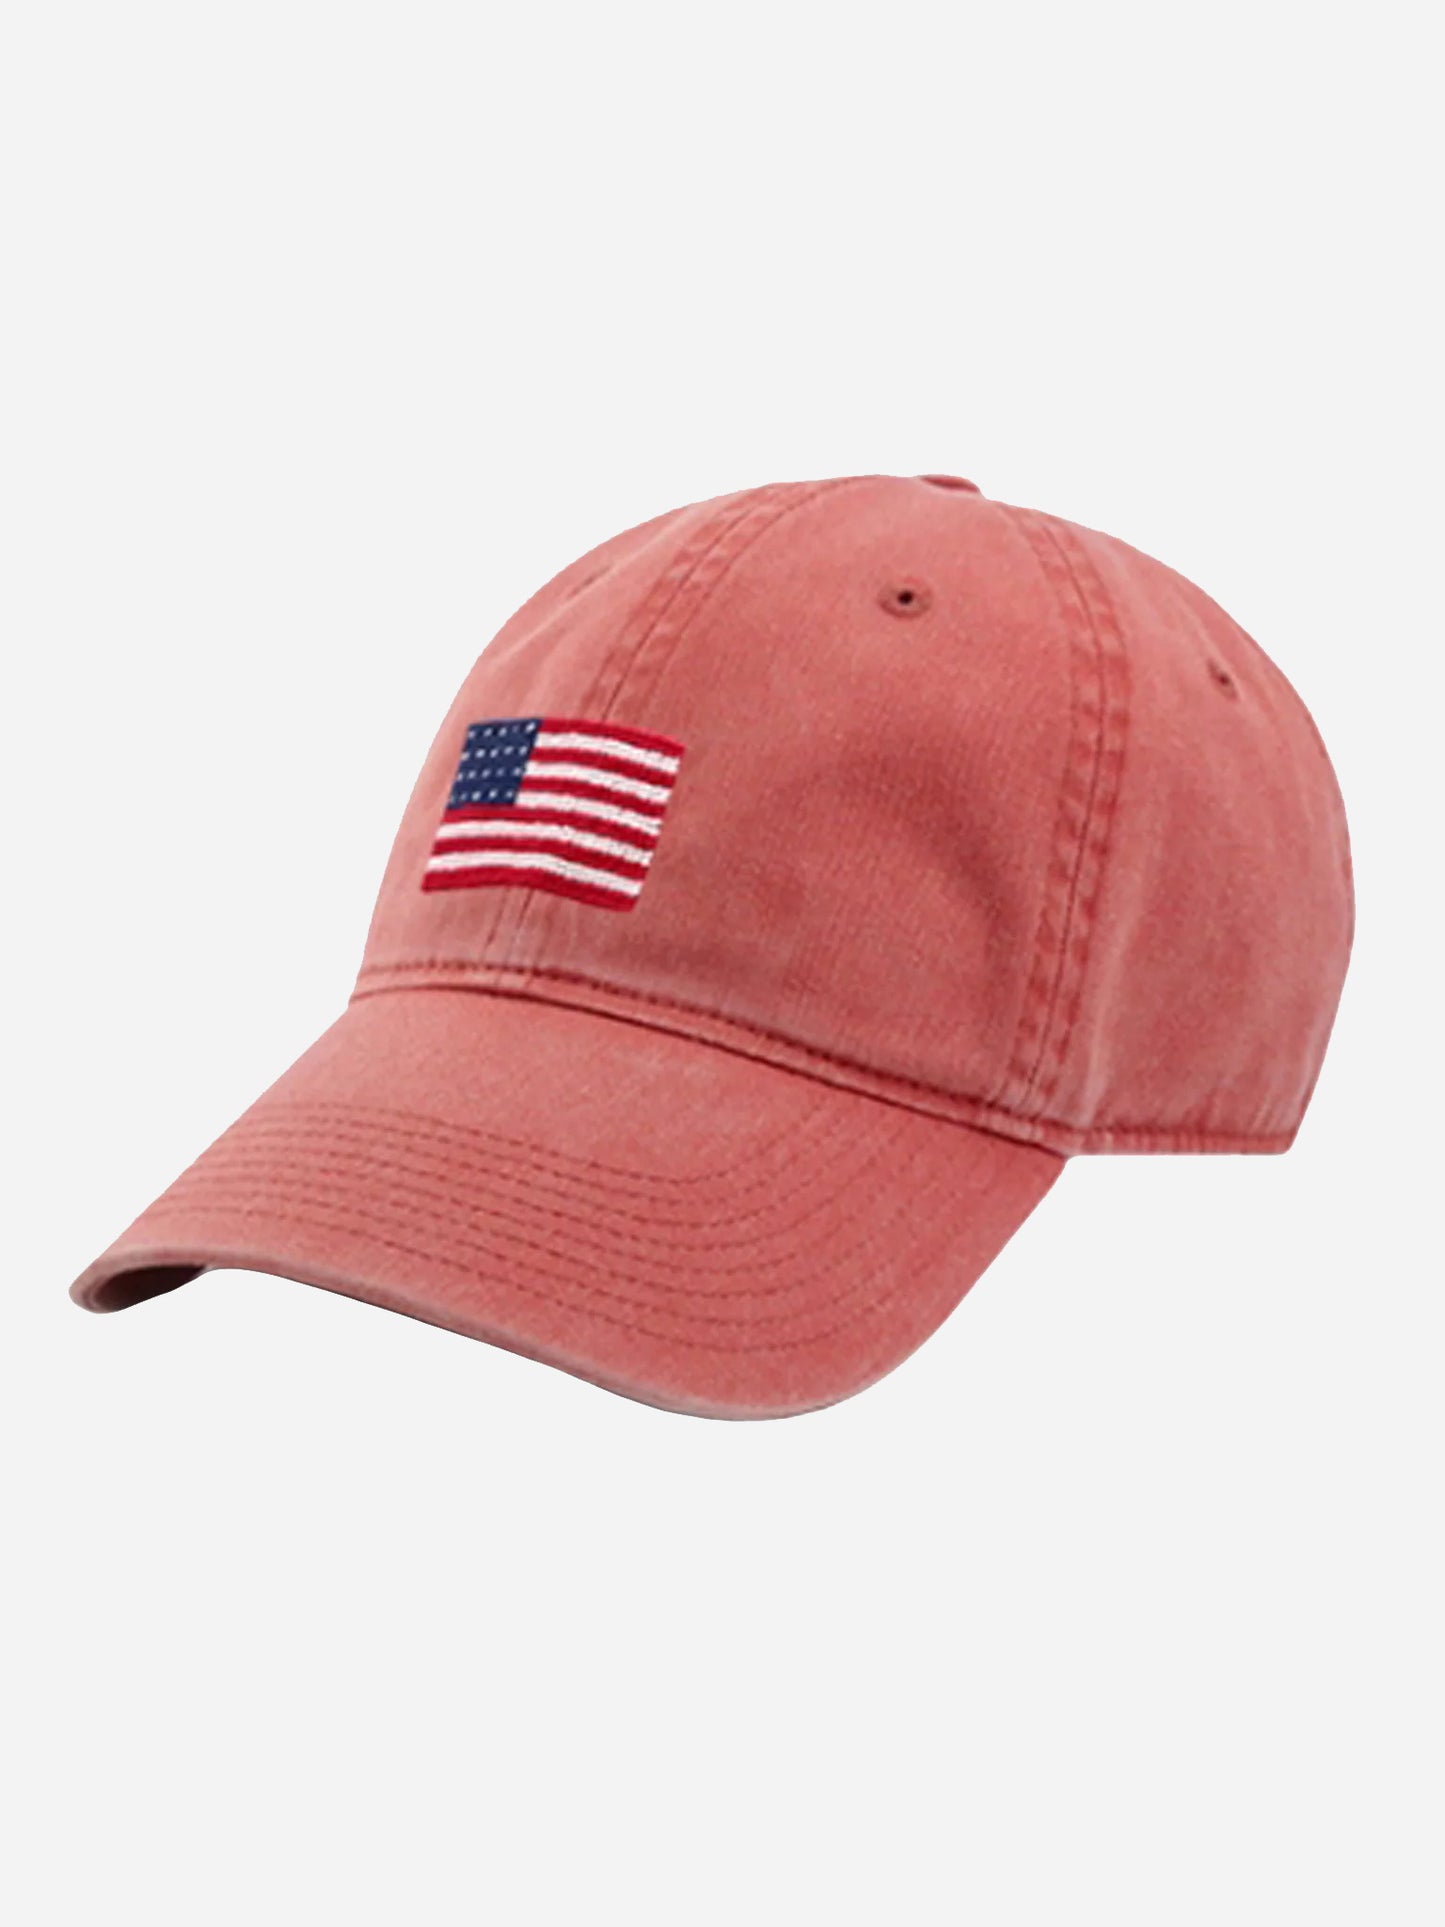 Smathers + Branson American Flag Needlepoint Hat